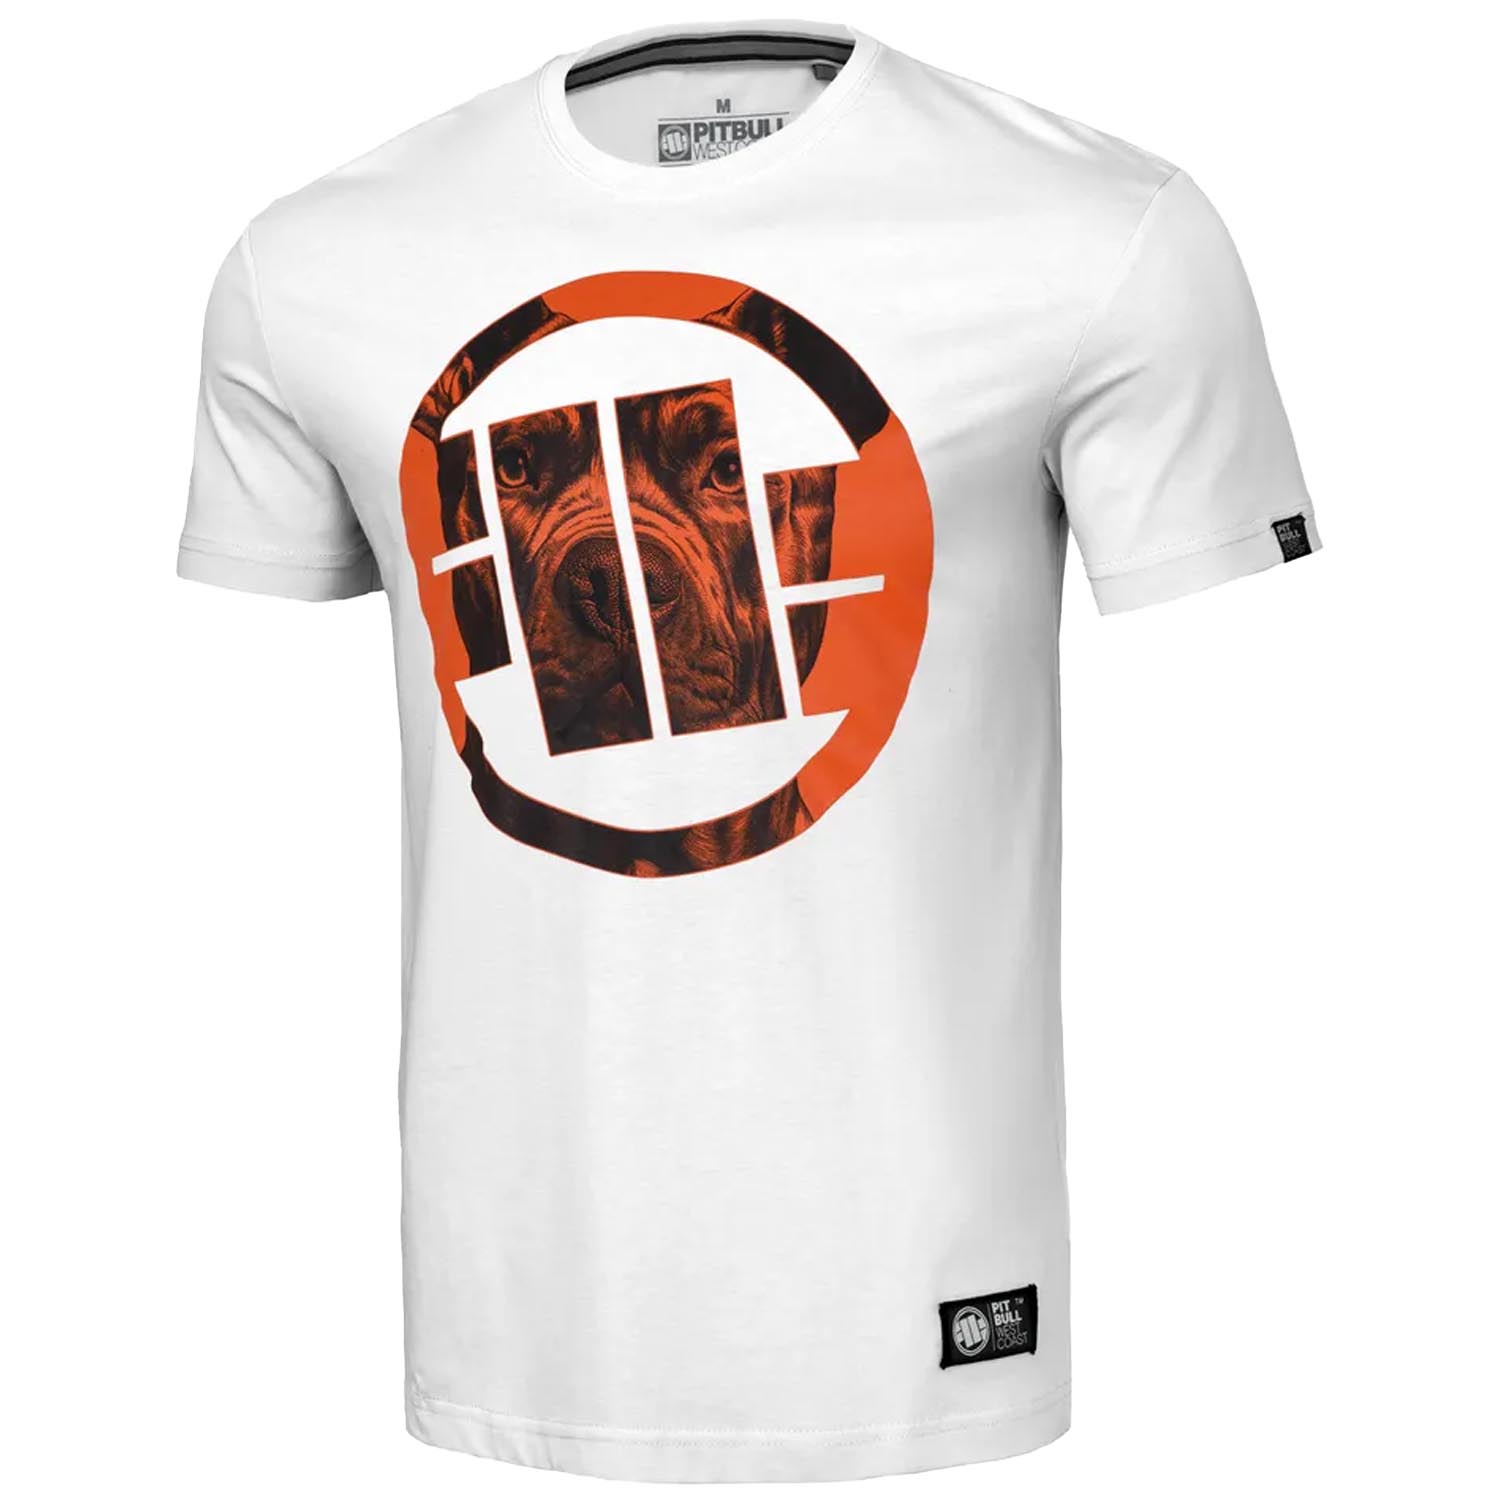 Pit Bull West Coast T-Shirt, Orange Dog 24, weiß-orange